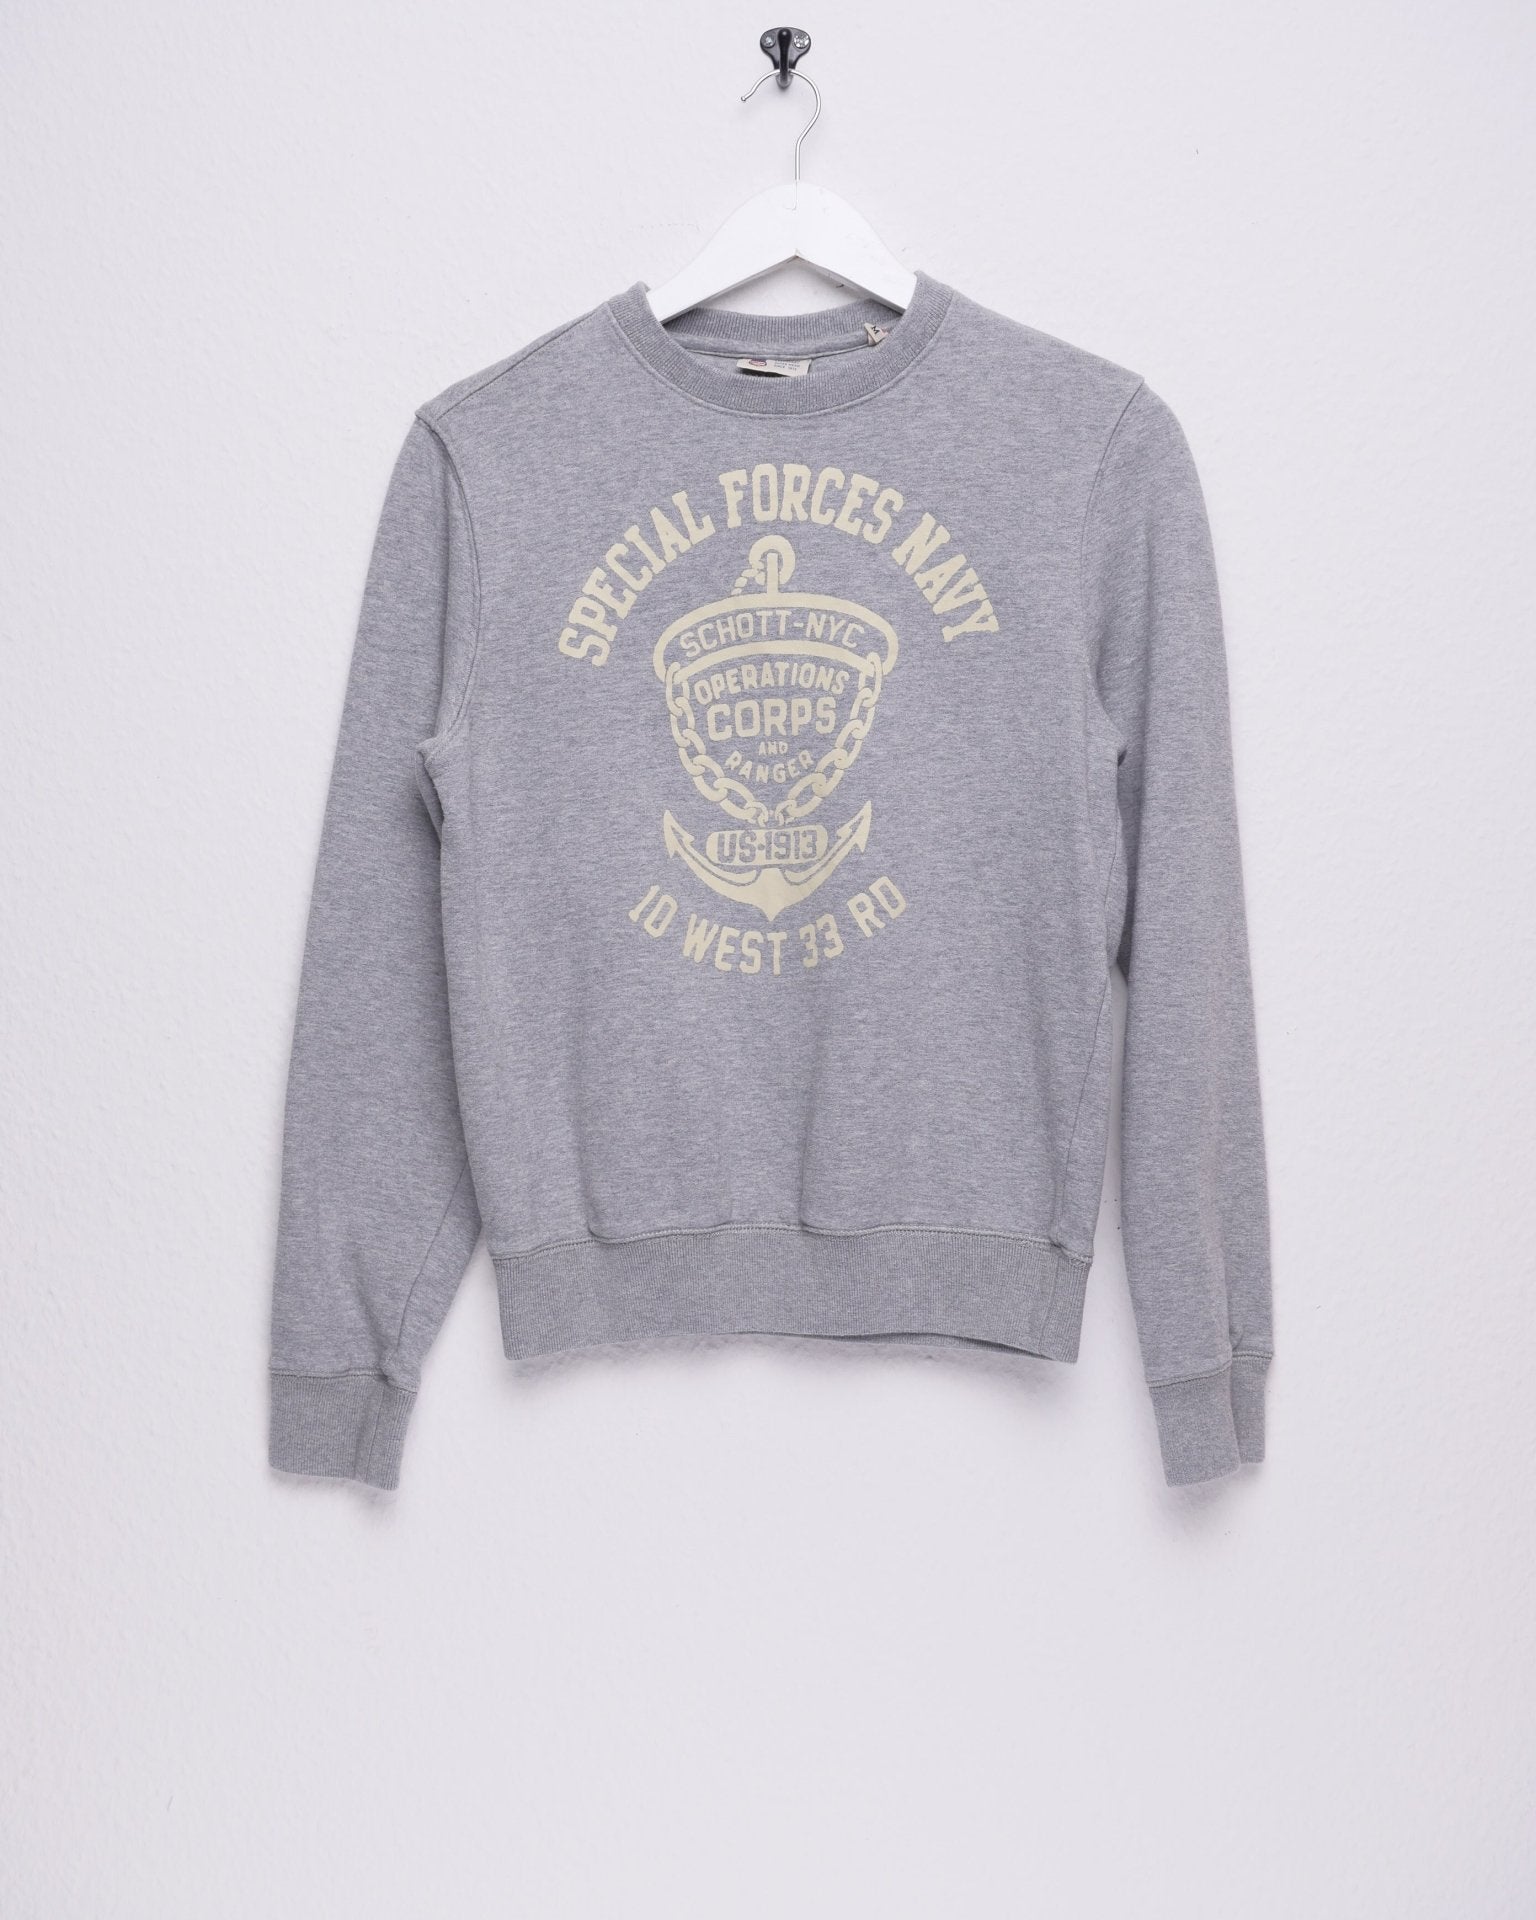 Schott printed 'Special Forces Navy' grey Sweater - Peeces